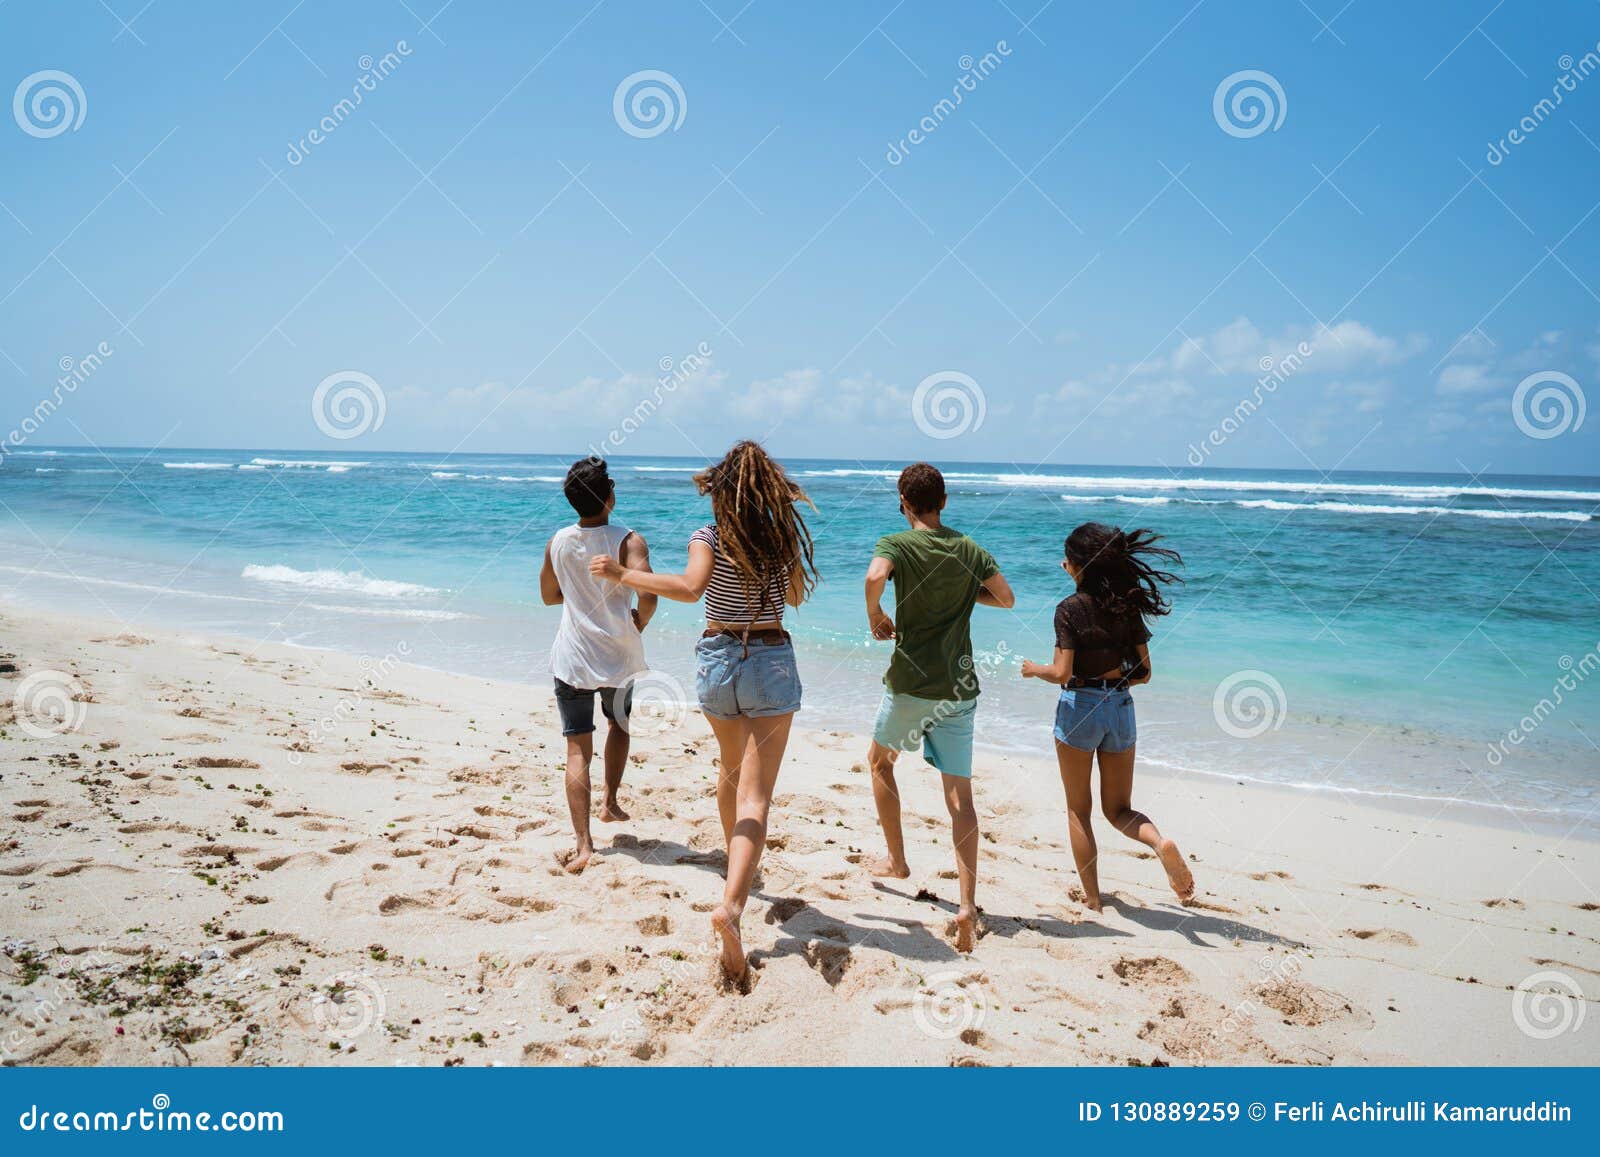 Friendship Freedom Beach Summer Stock Image - Image of friend, team